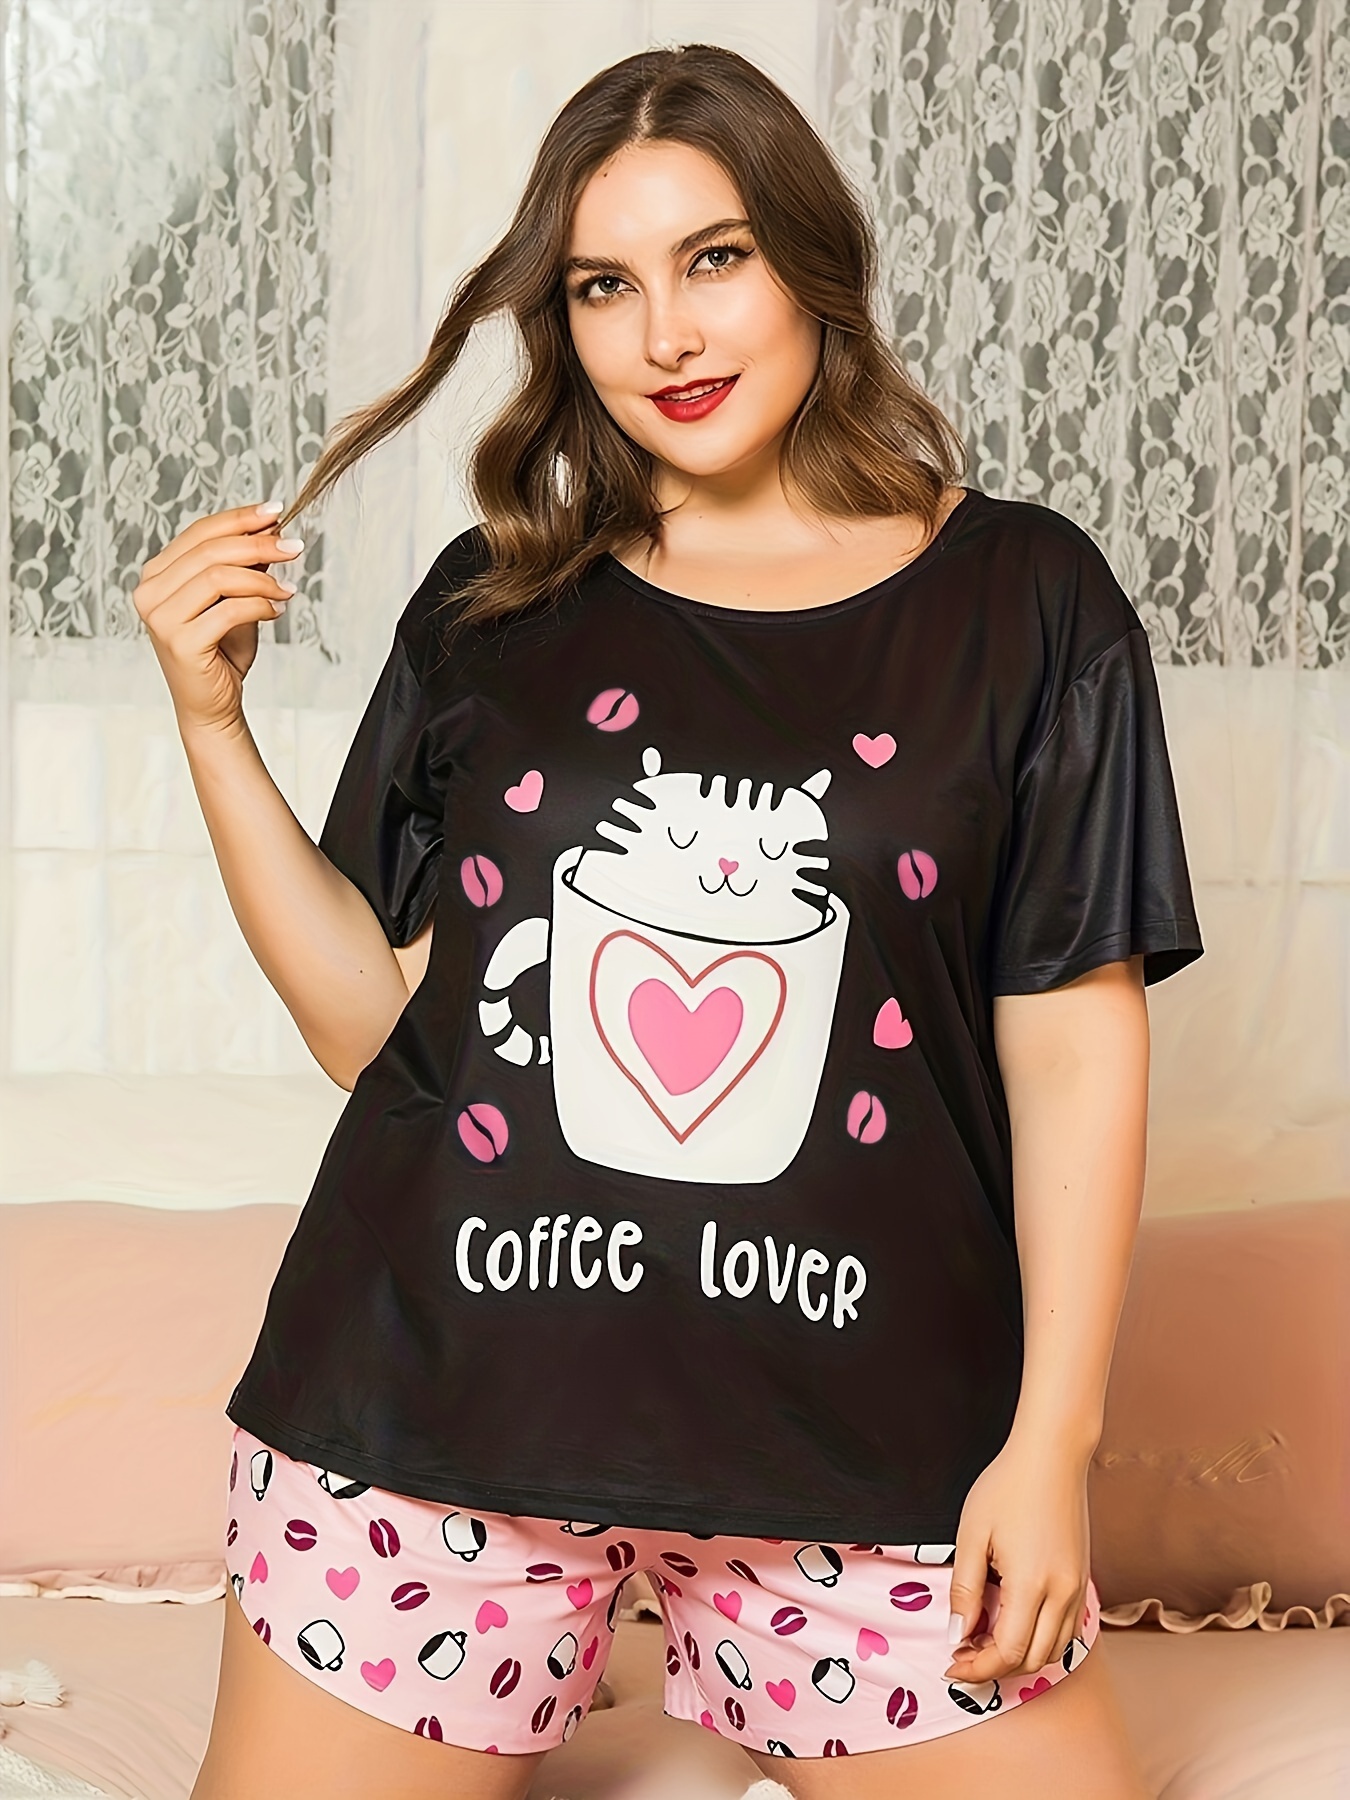 Women's Soft & Breathable V-Neck T-shirt and Shorts, 2-Piece Pajama Set